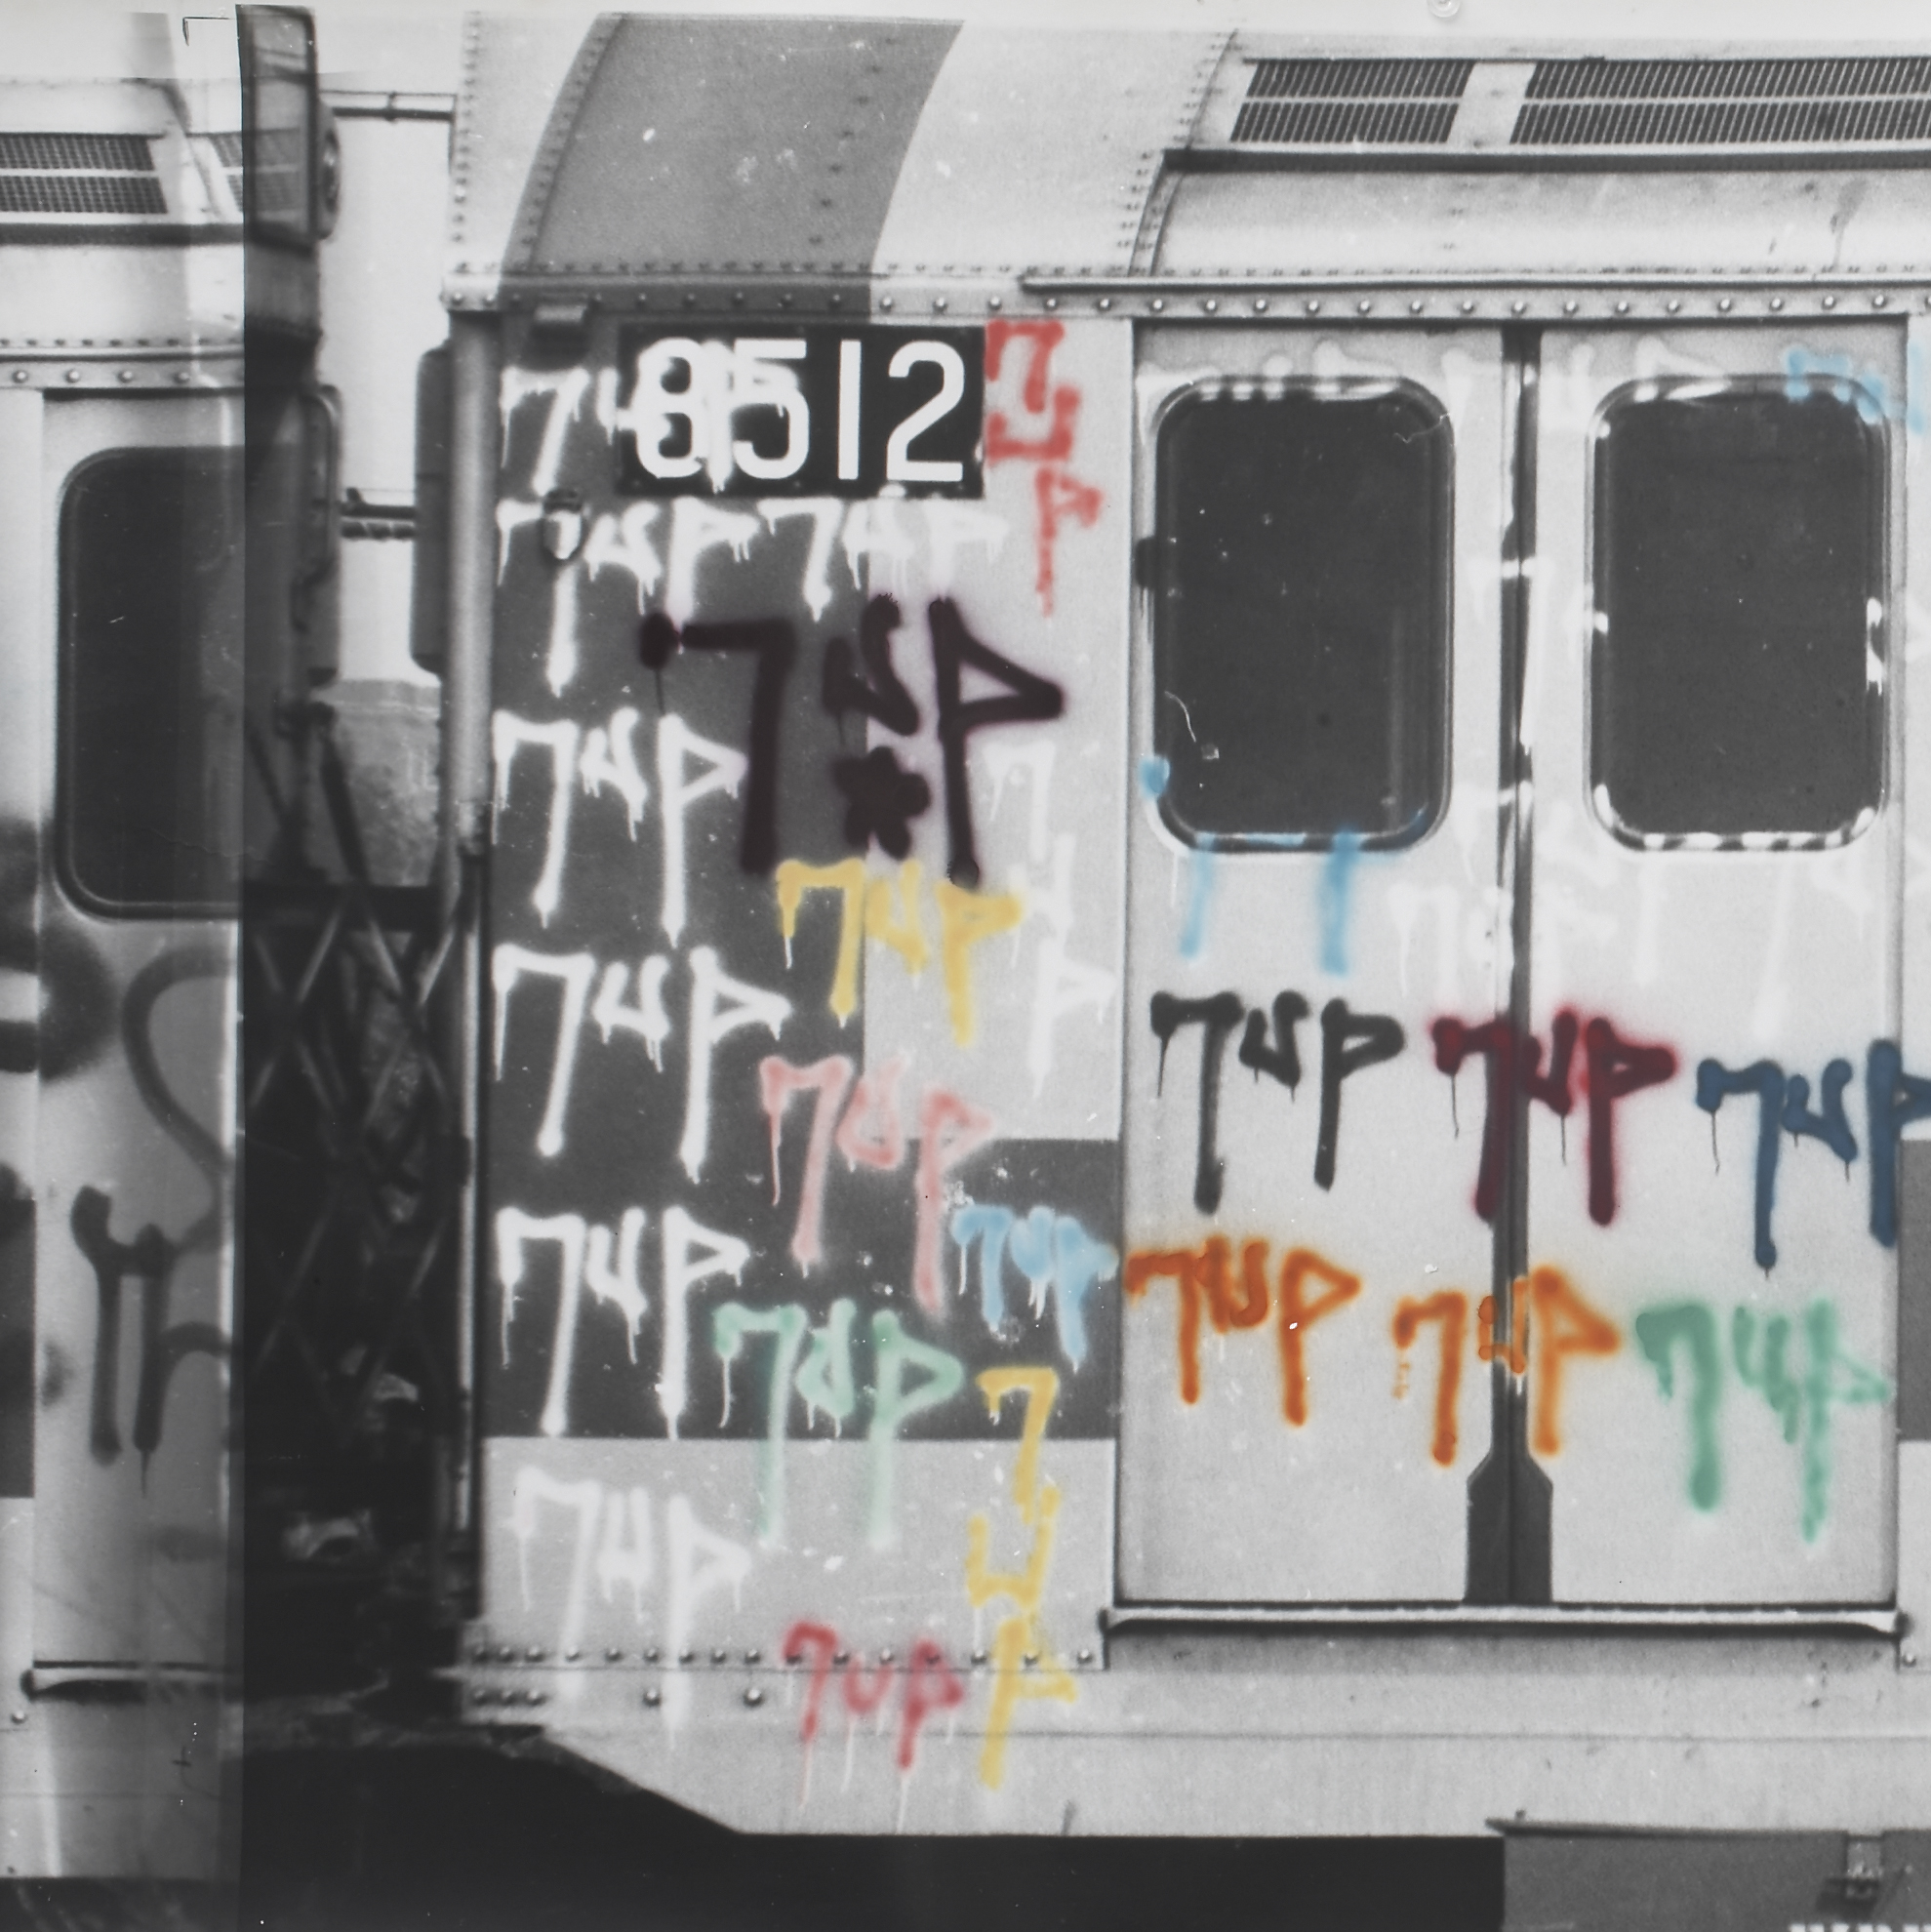 Train car covered in colorful graffiti